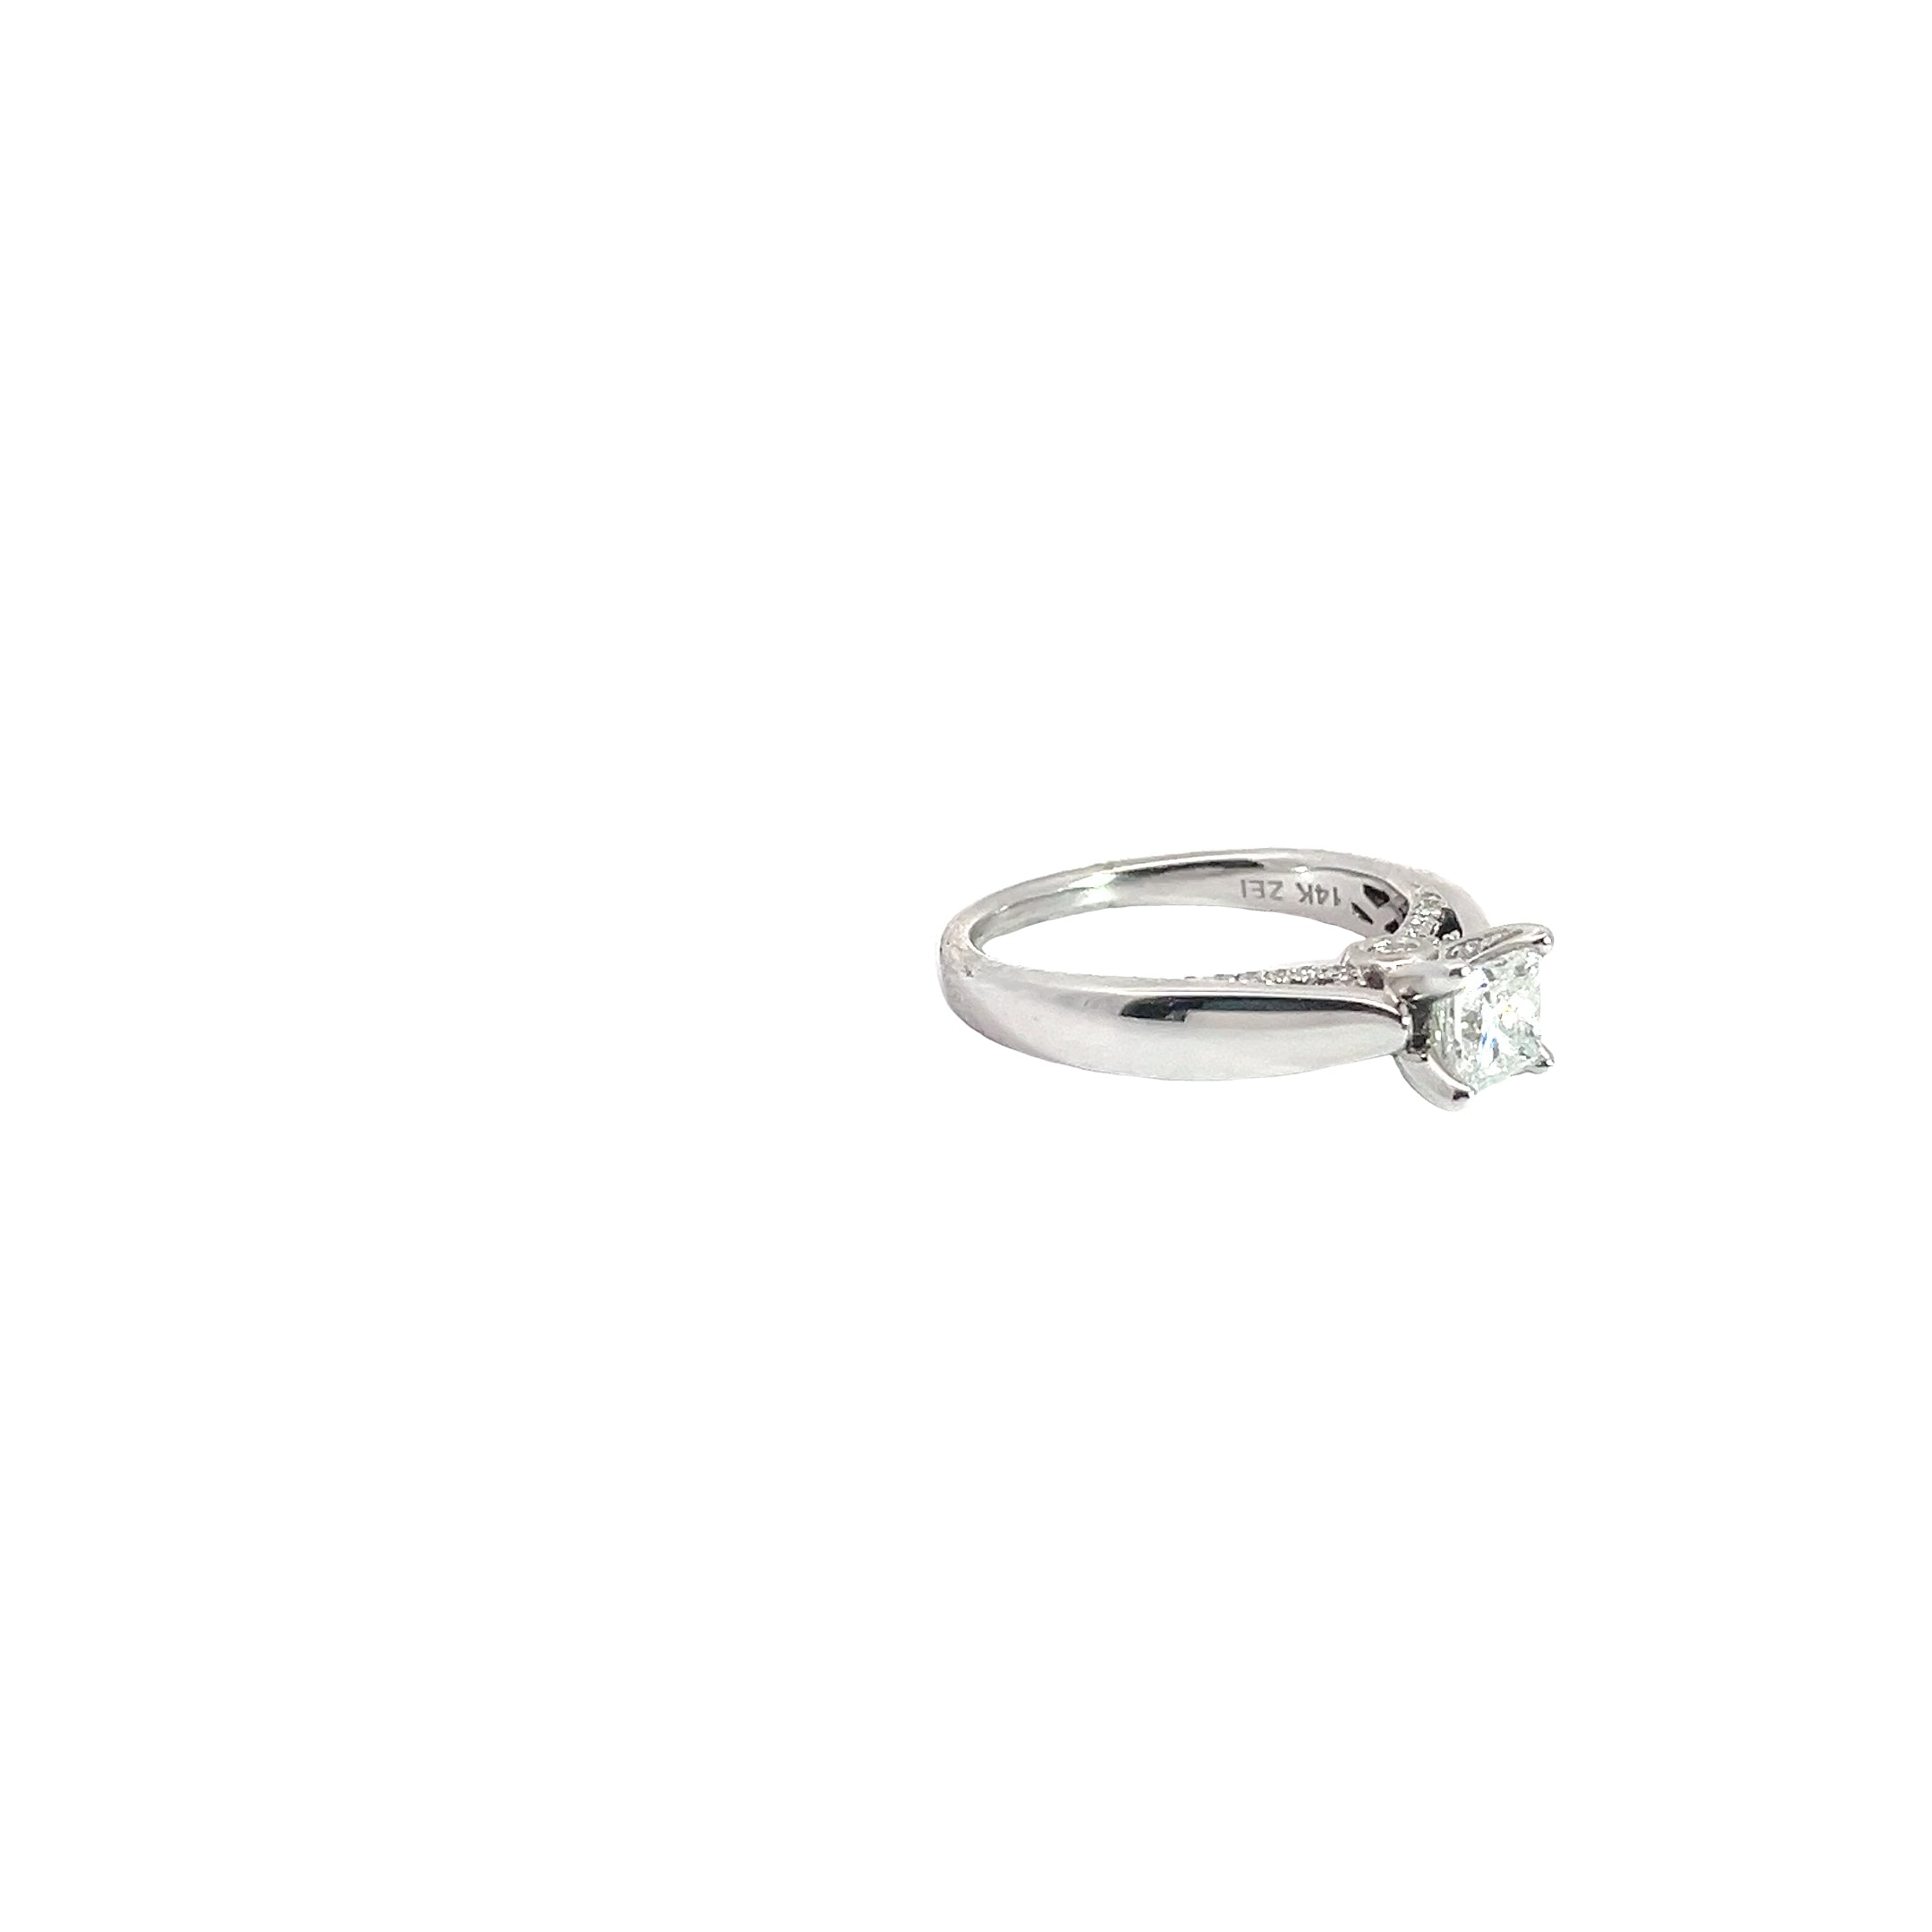 14k white gold 1.00ct G SI1 Princess Cut Diamond and .15ct G SI1 Round diamond under basket mounting engagement ring